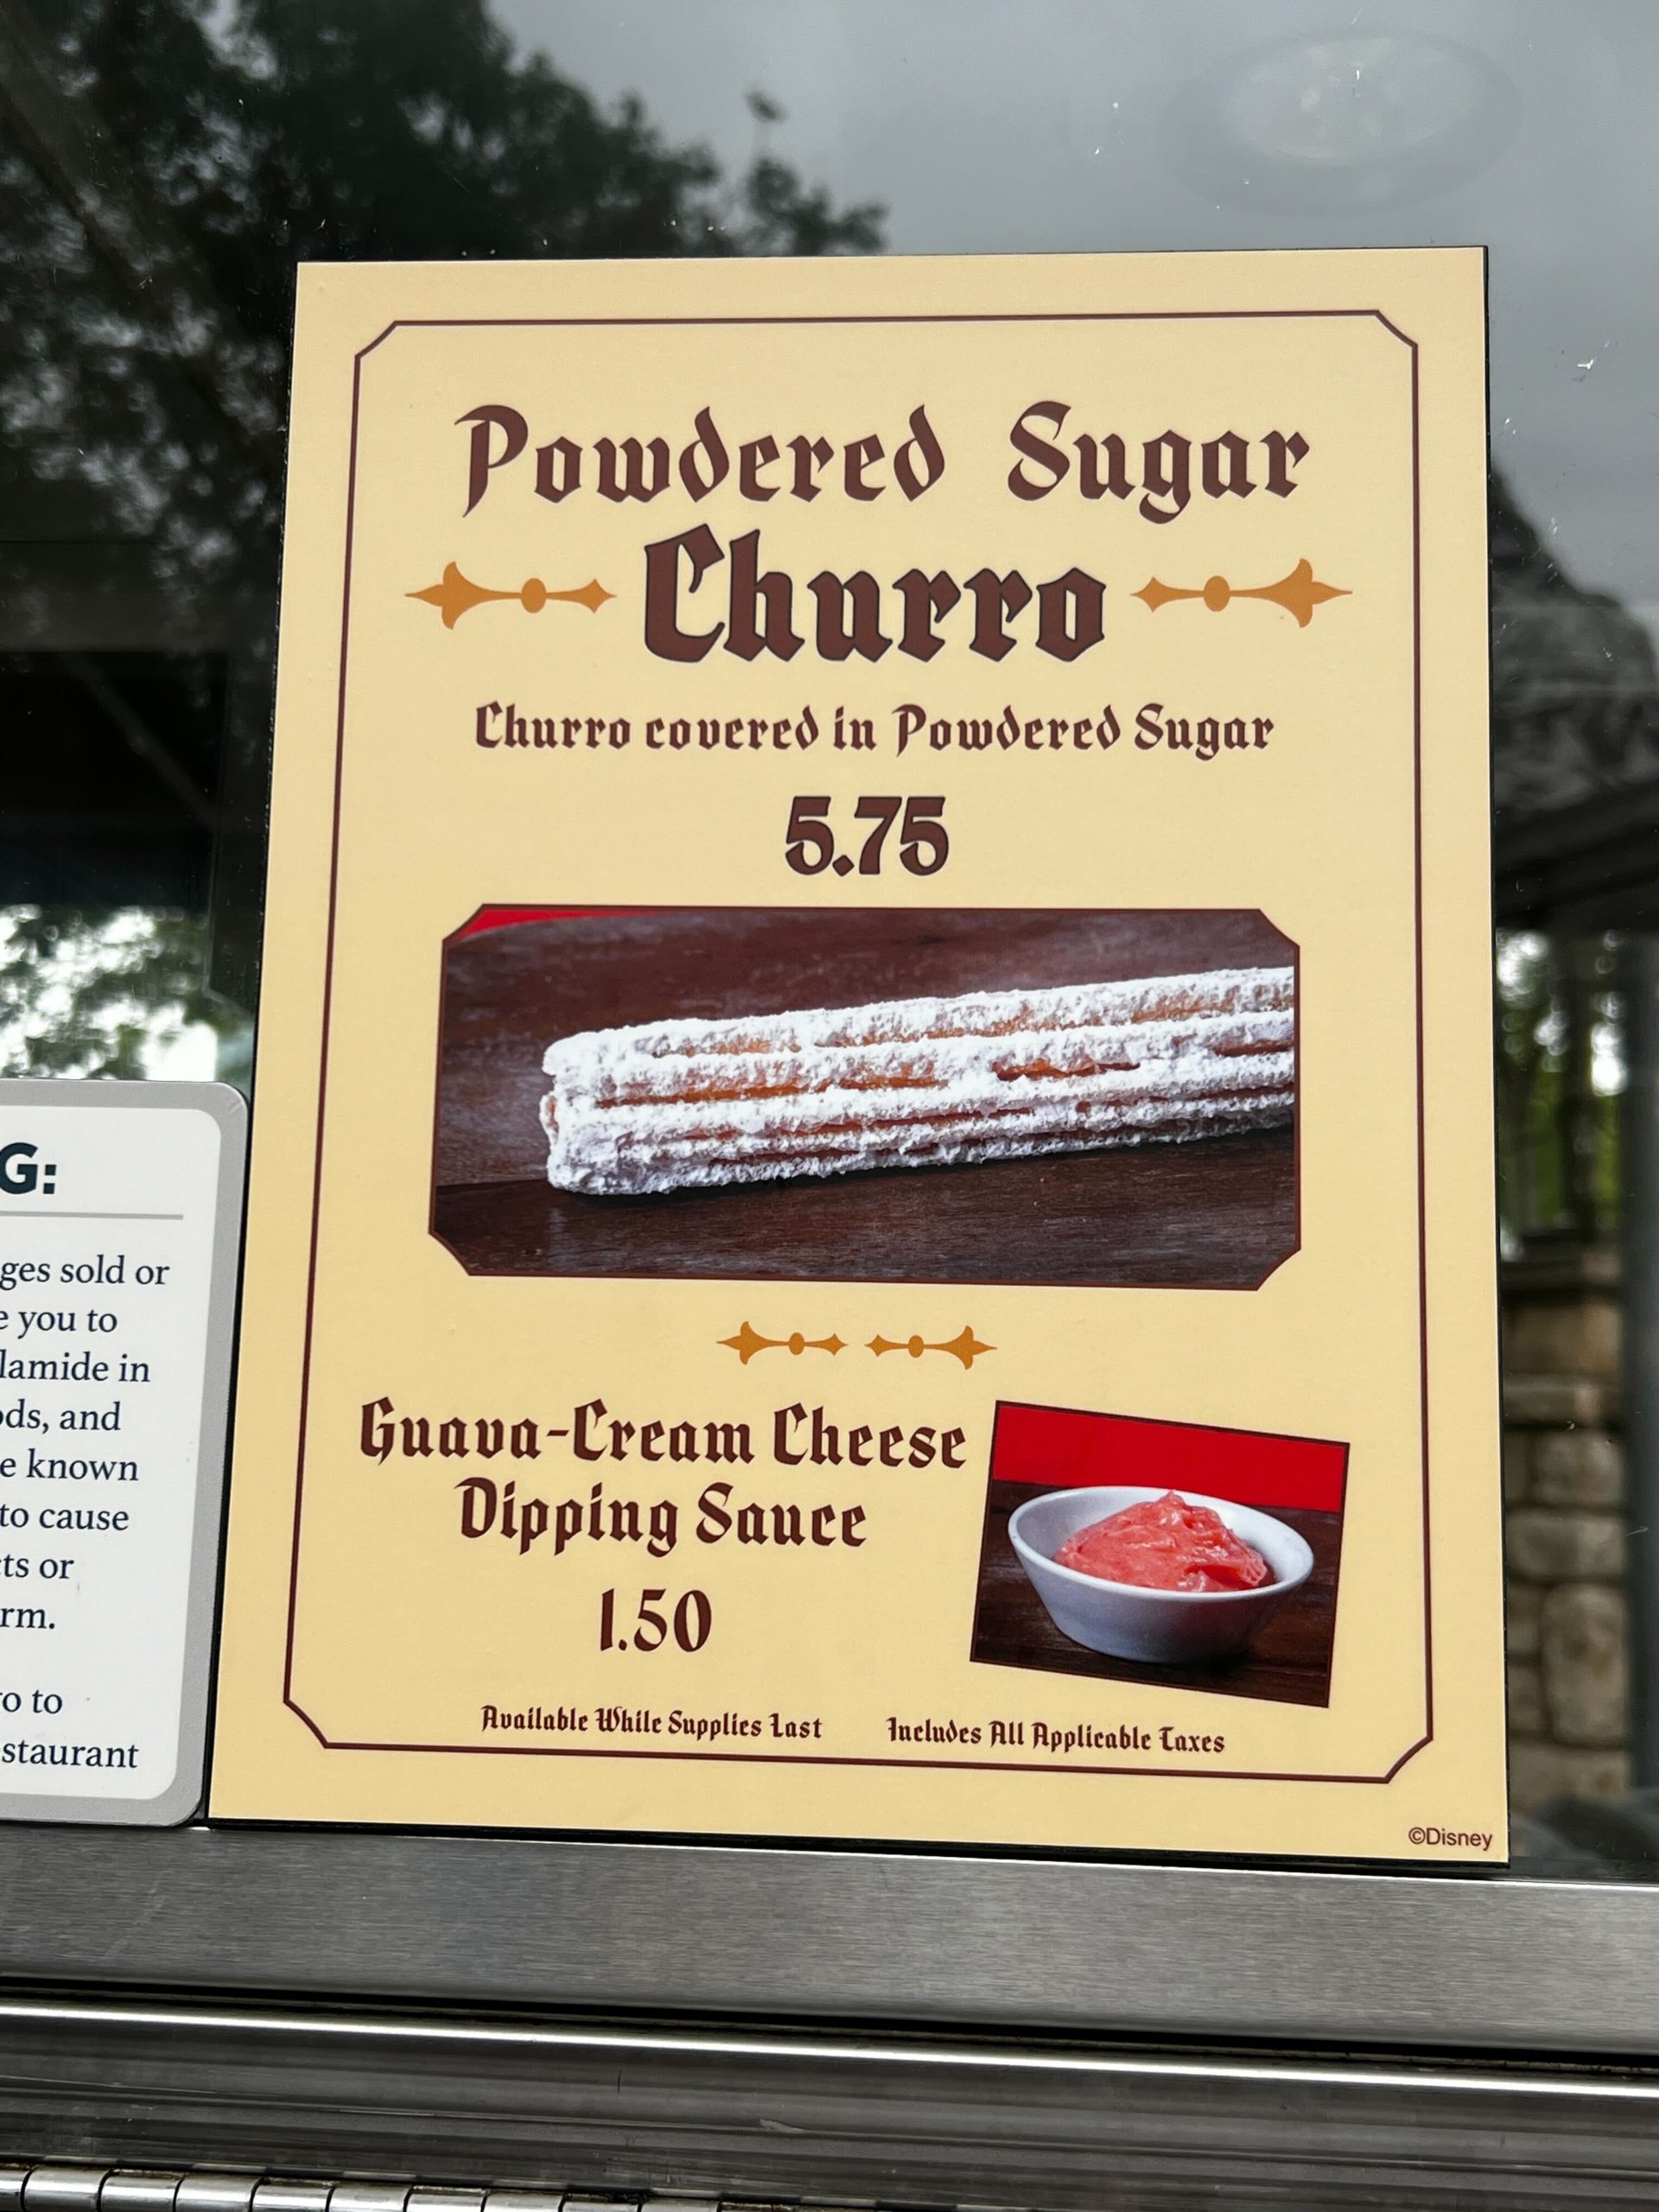 Powdered Sugar Churro